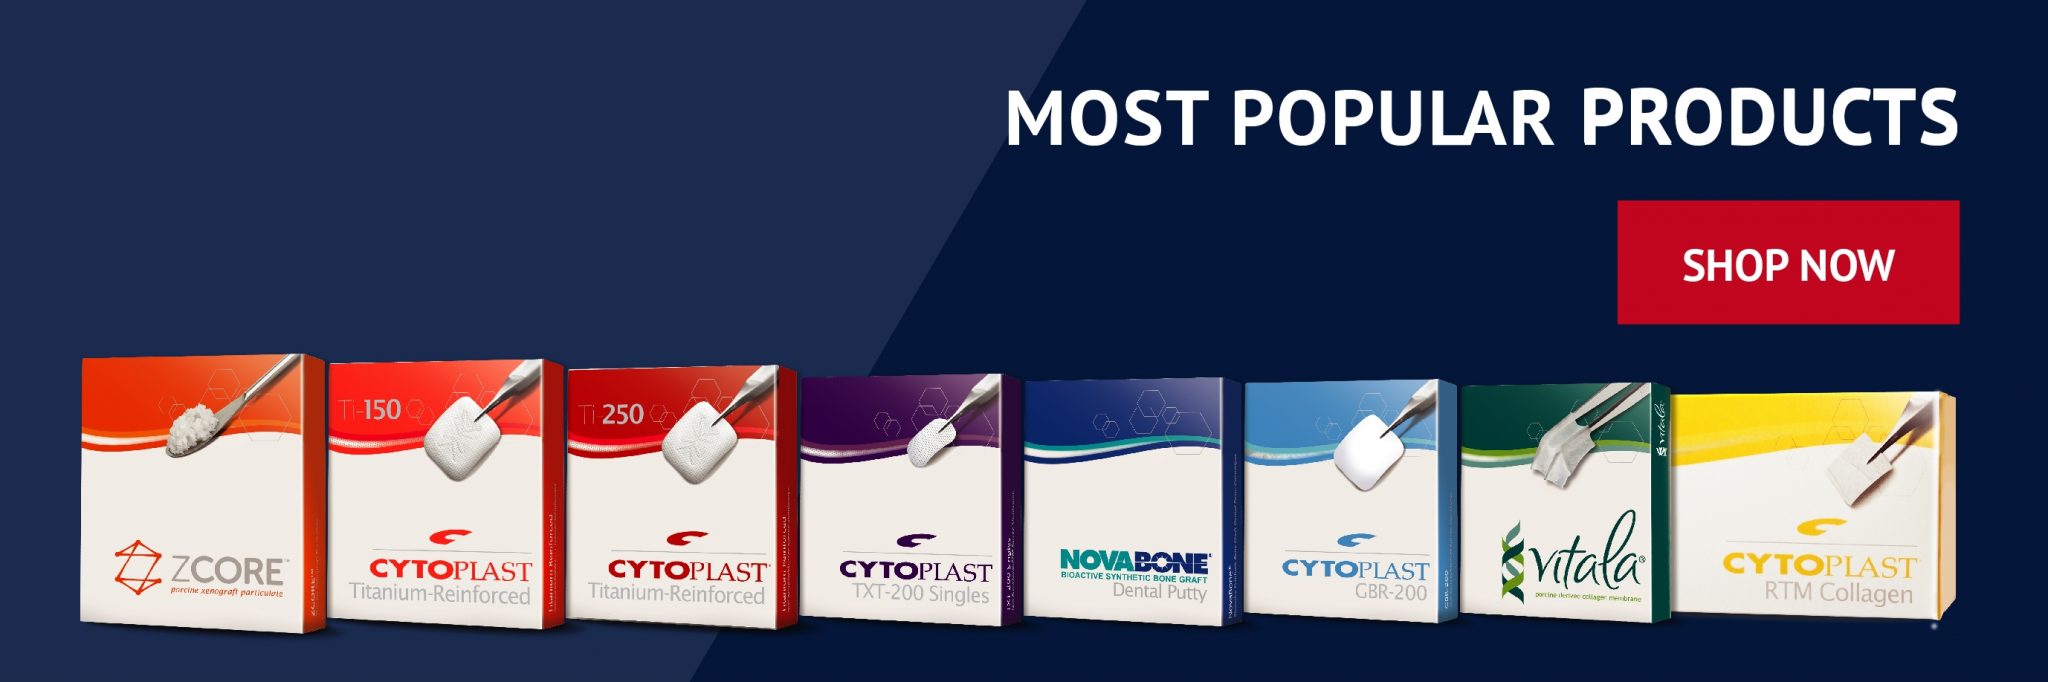 CYTOPLAST-0-MostPopularProducts-02 copy